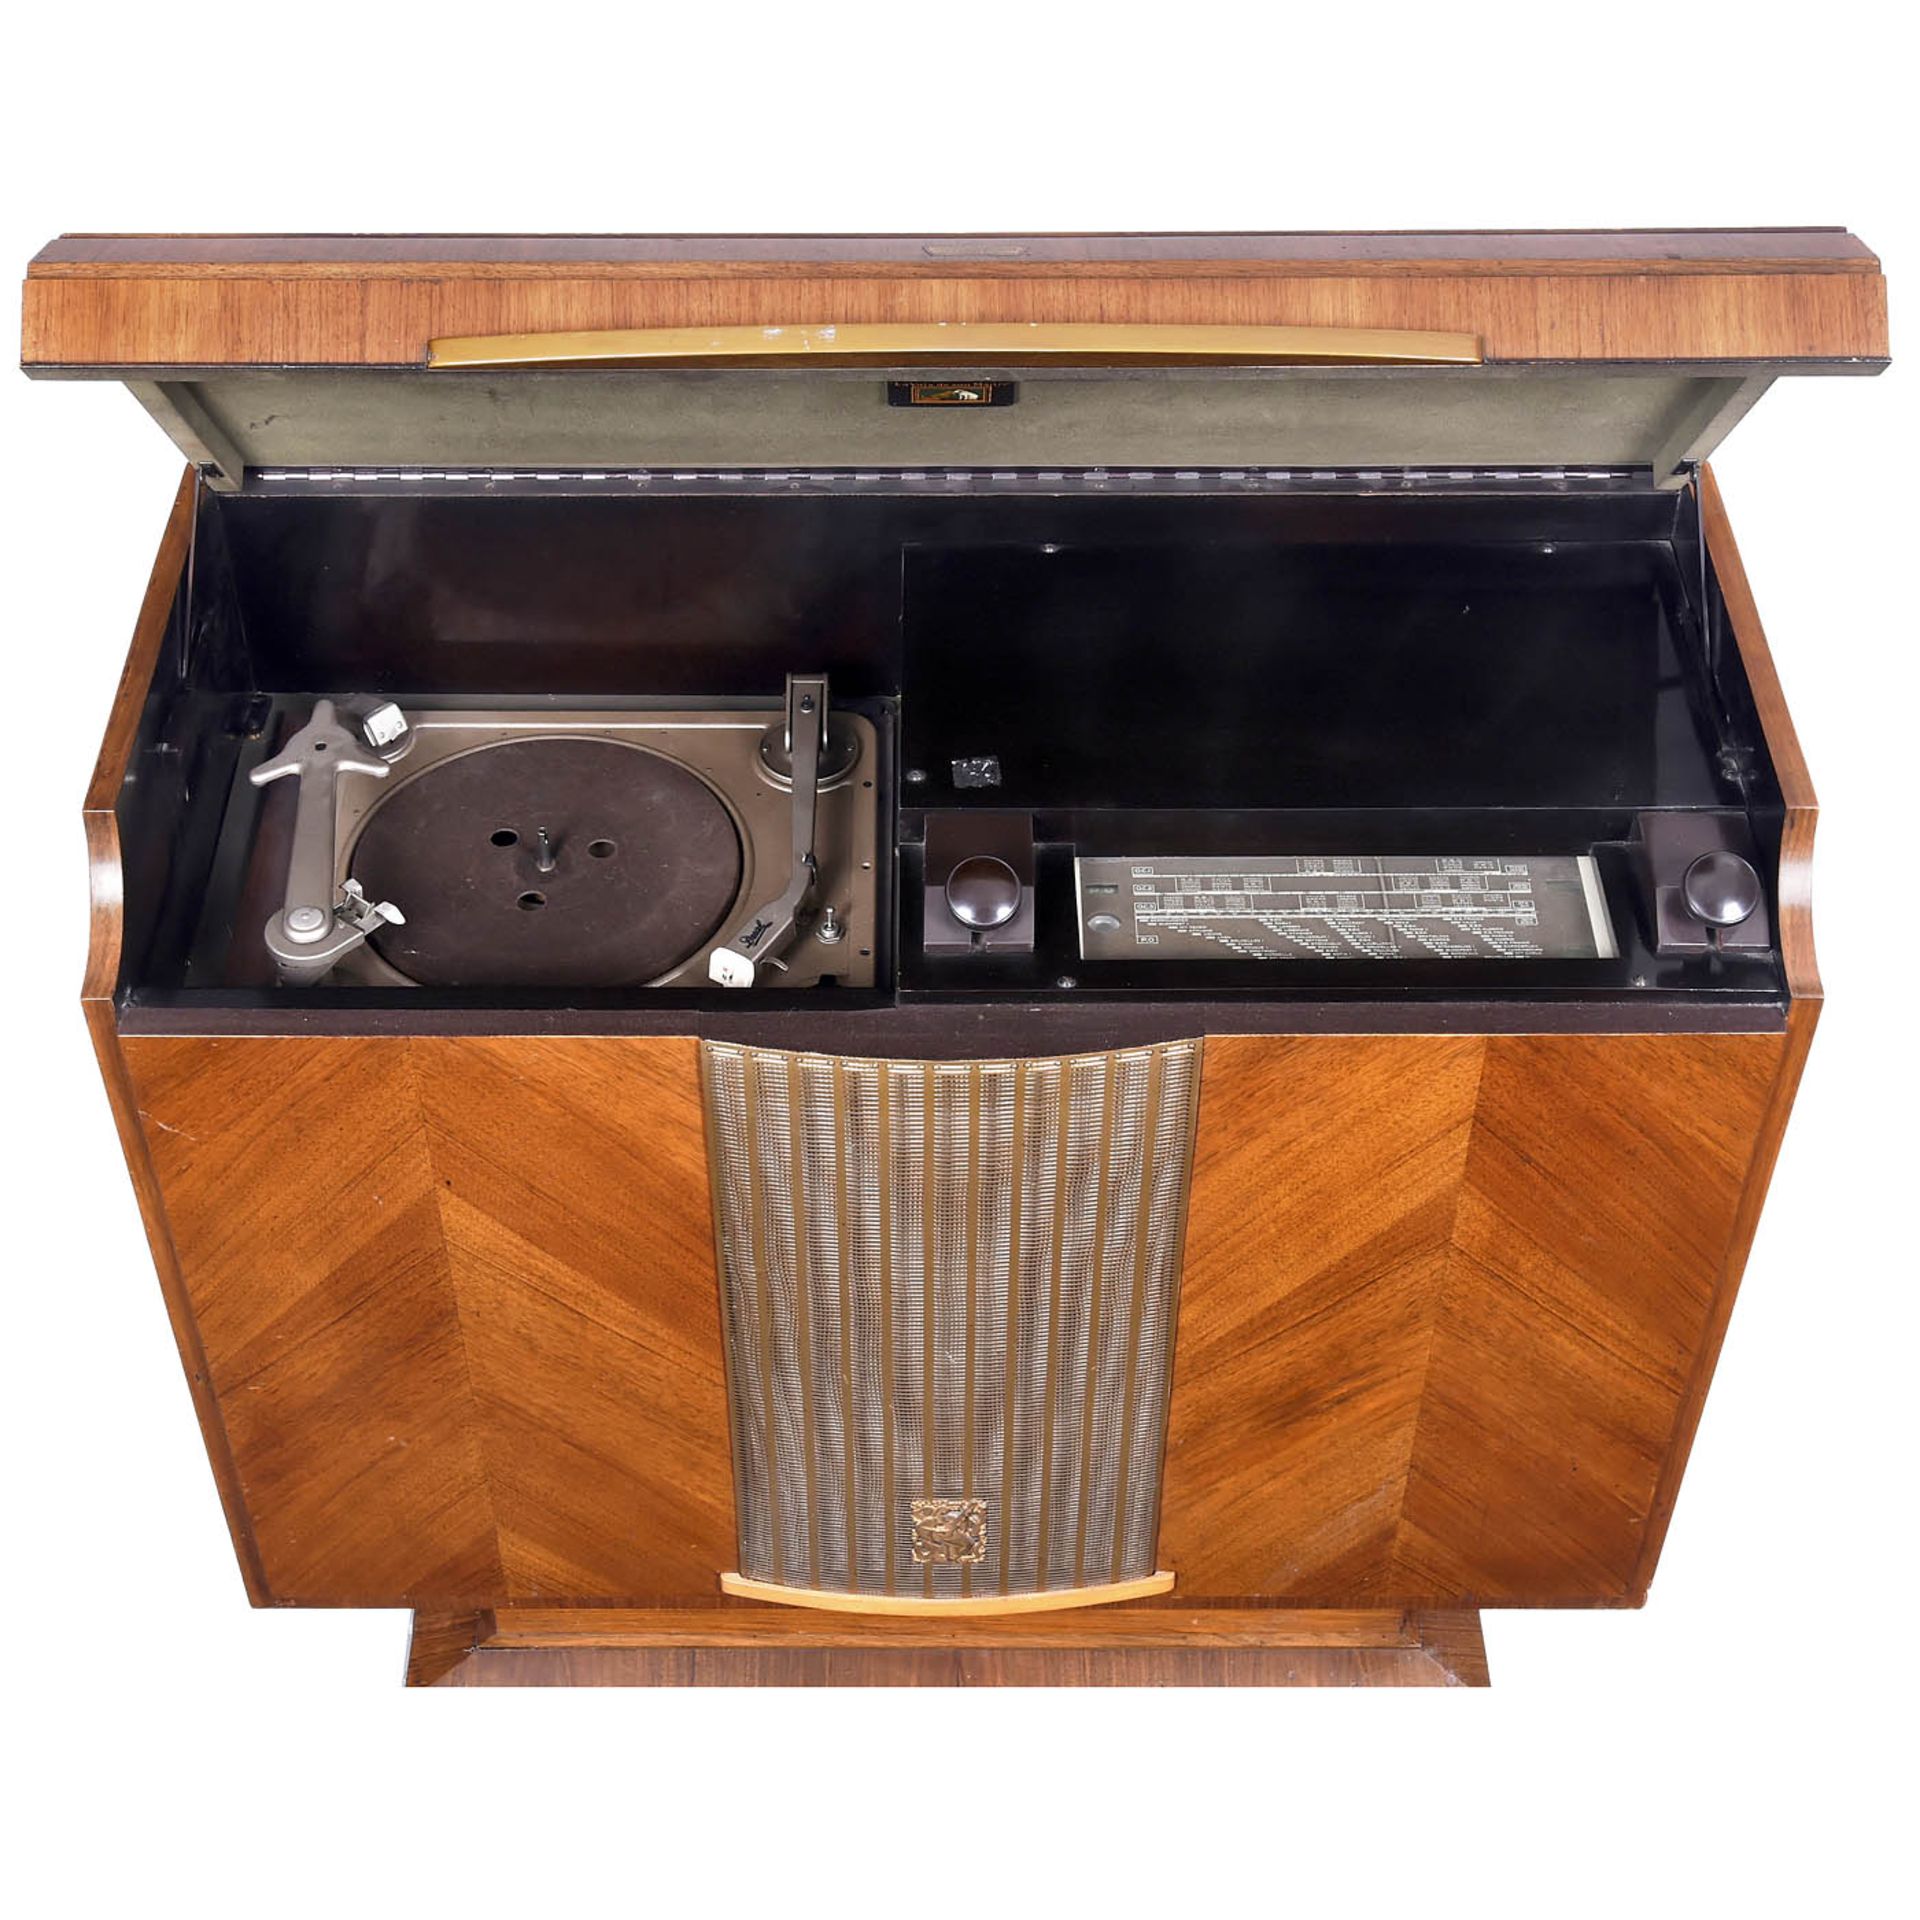 Pathé-Marconi Radio Furniture with Record Player, c. 1950 - Bild 2 aus 2